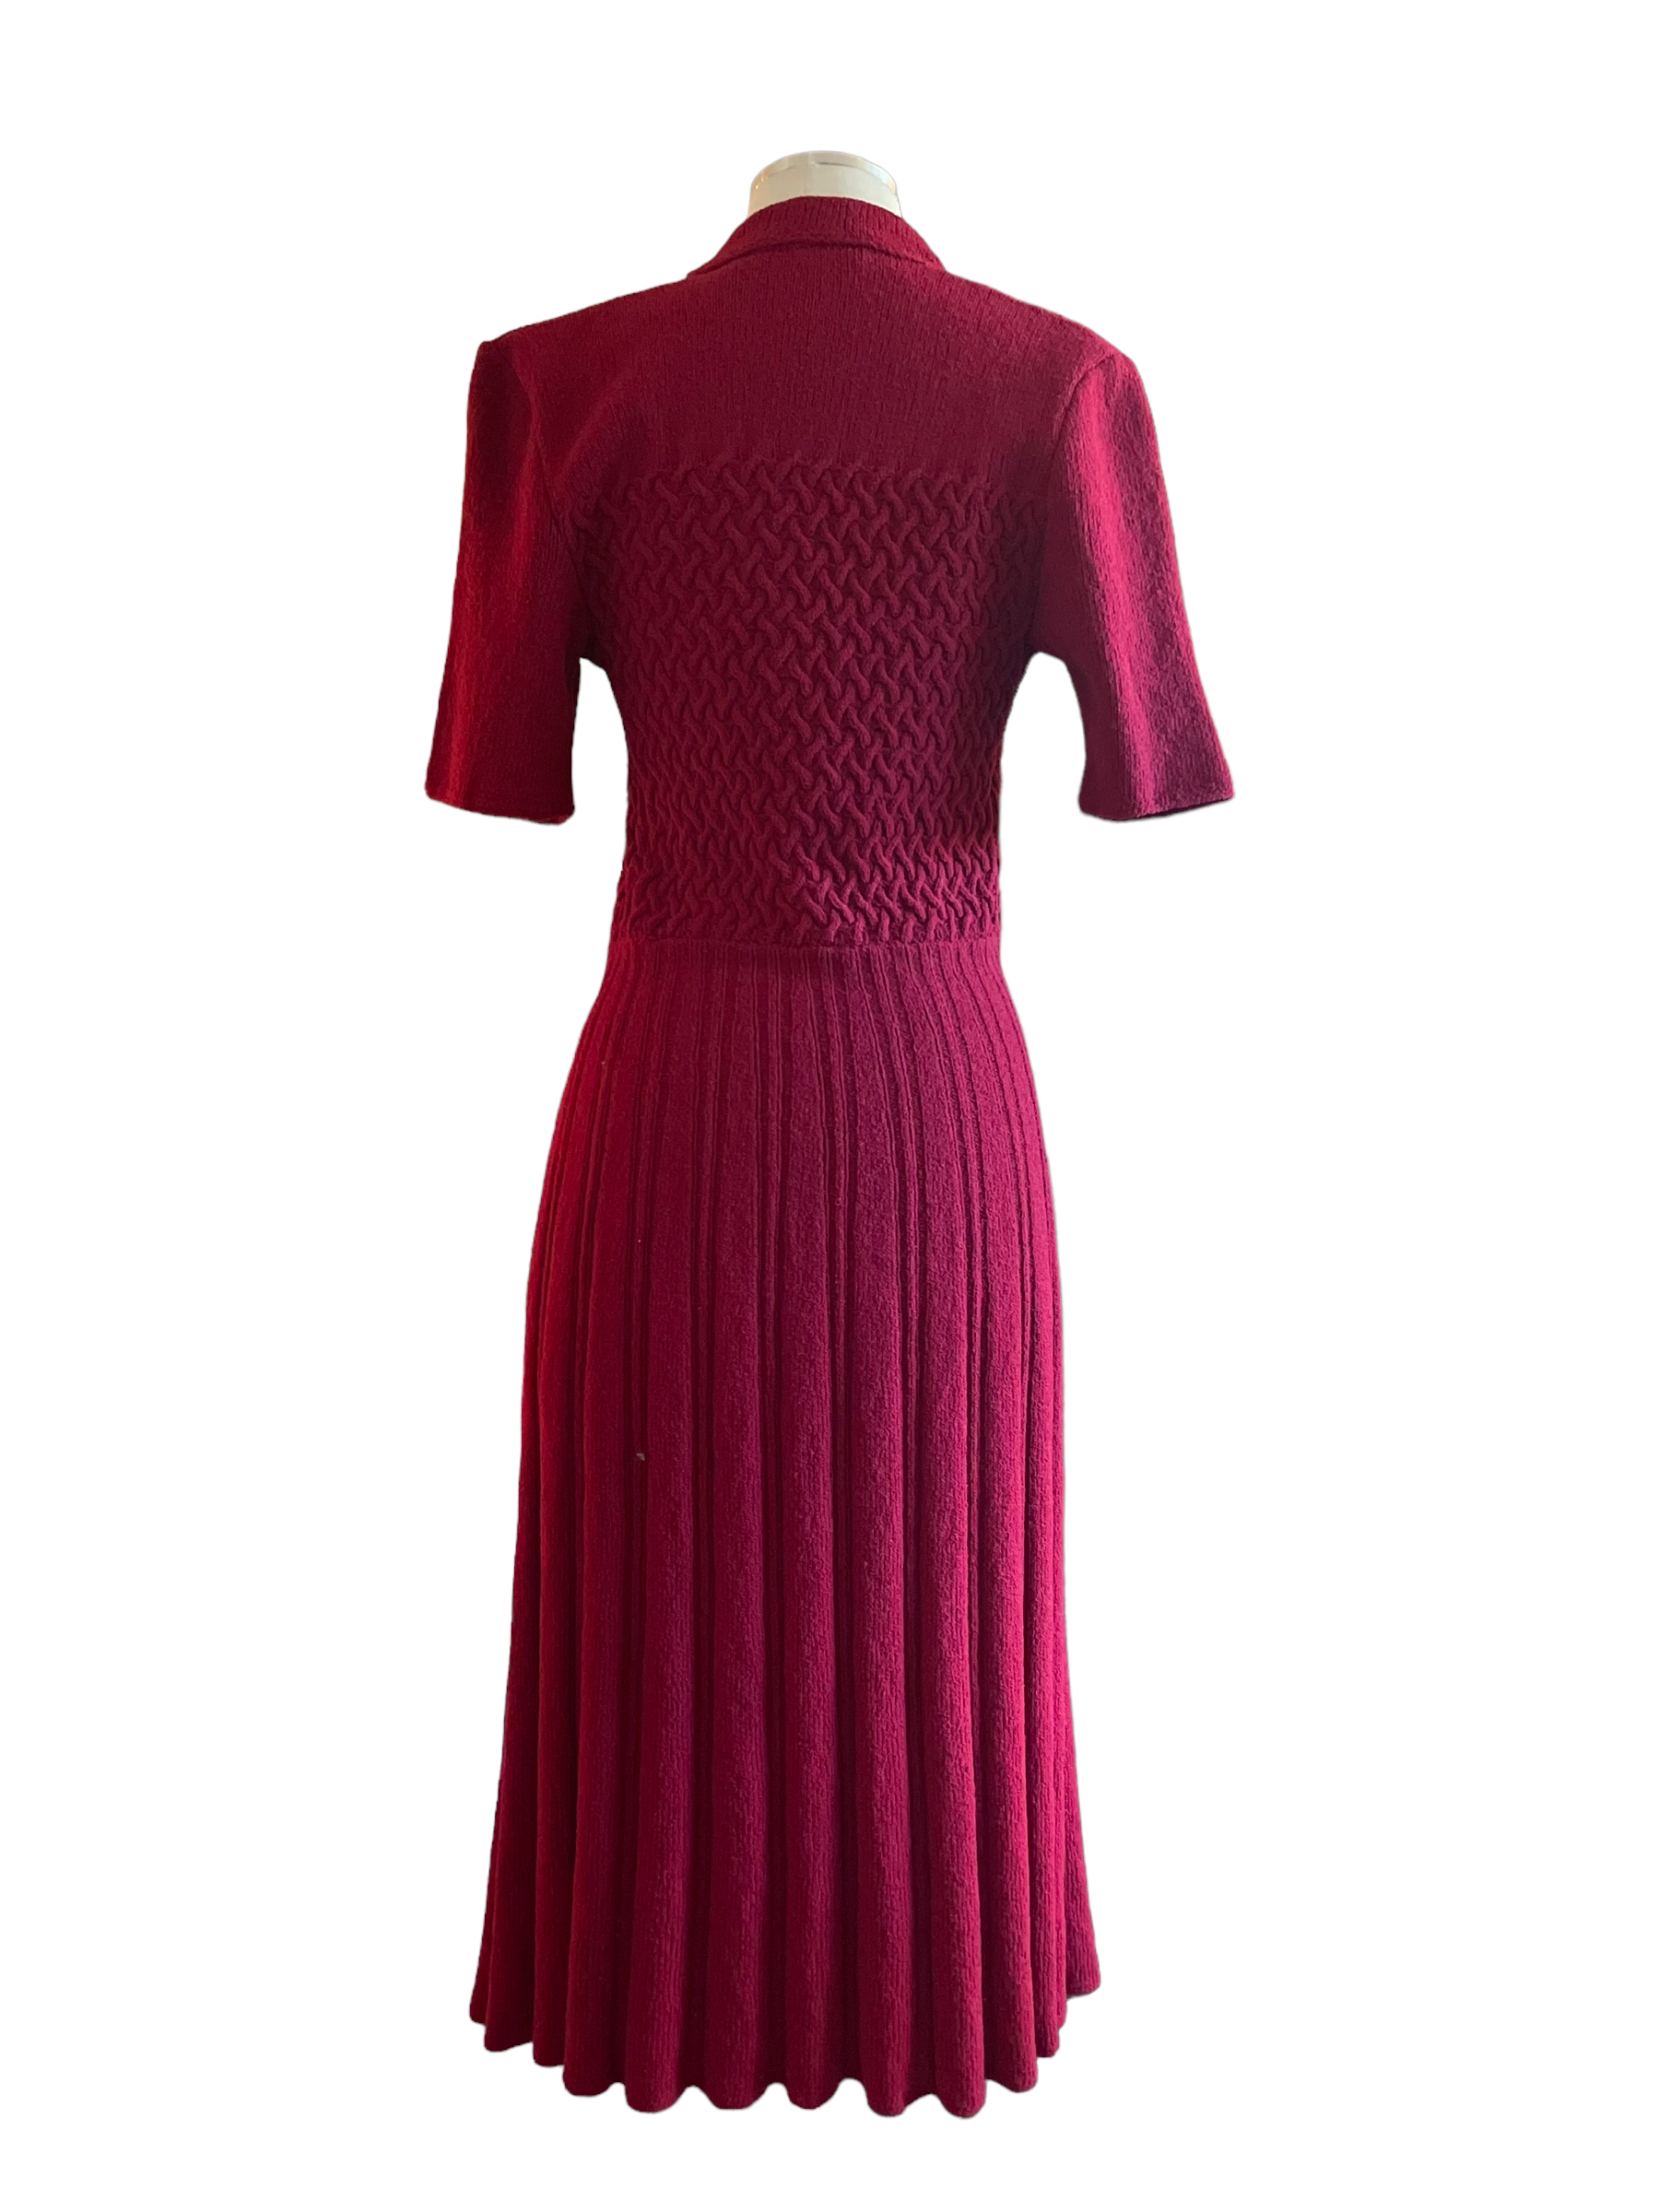 Vintage 1940s Hand-Knit Red Dress SZ S |  Barn Owl Vintage | Seattle Vintage Dresses Full back view.